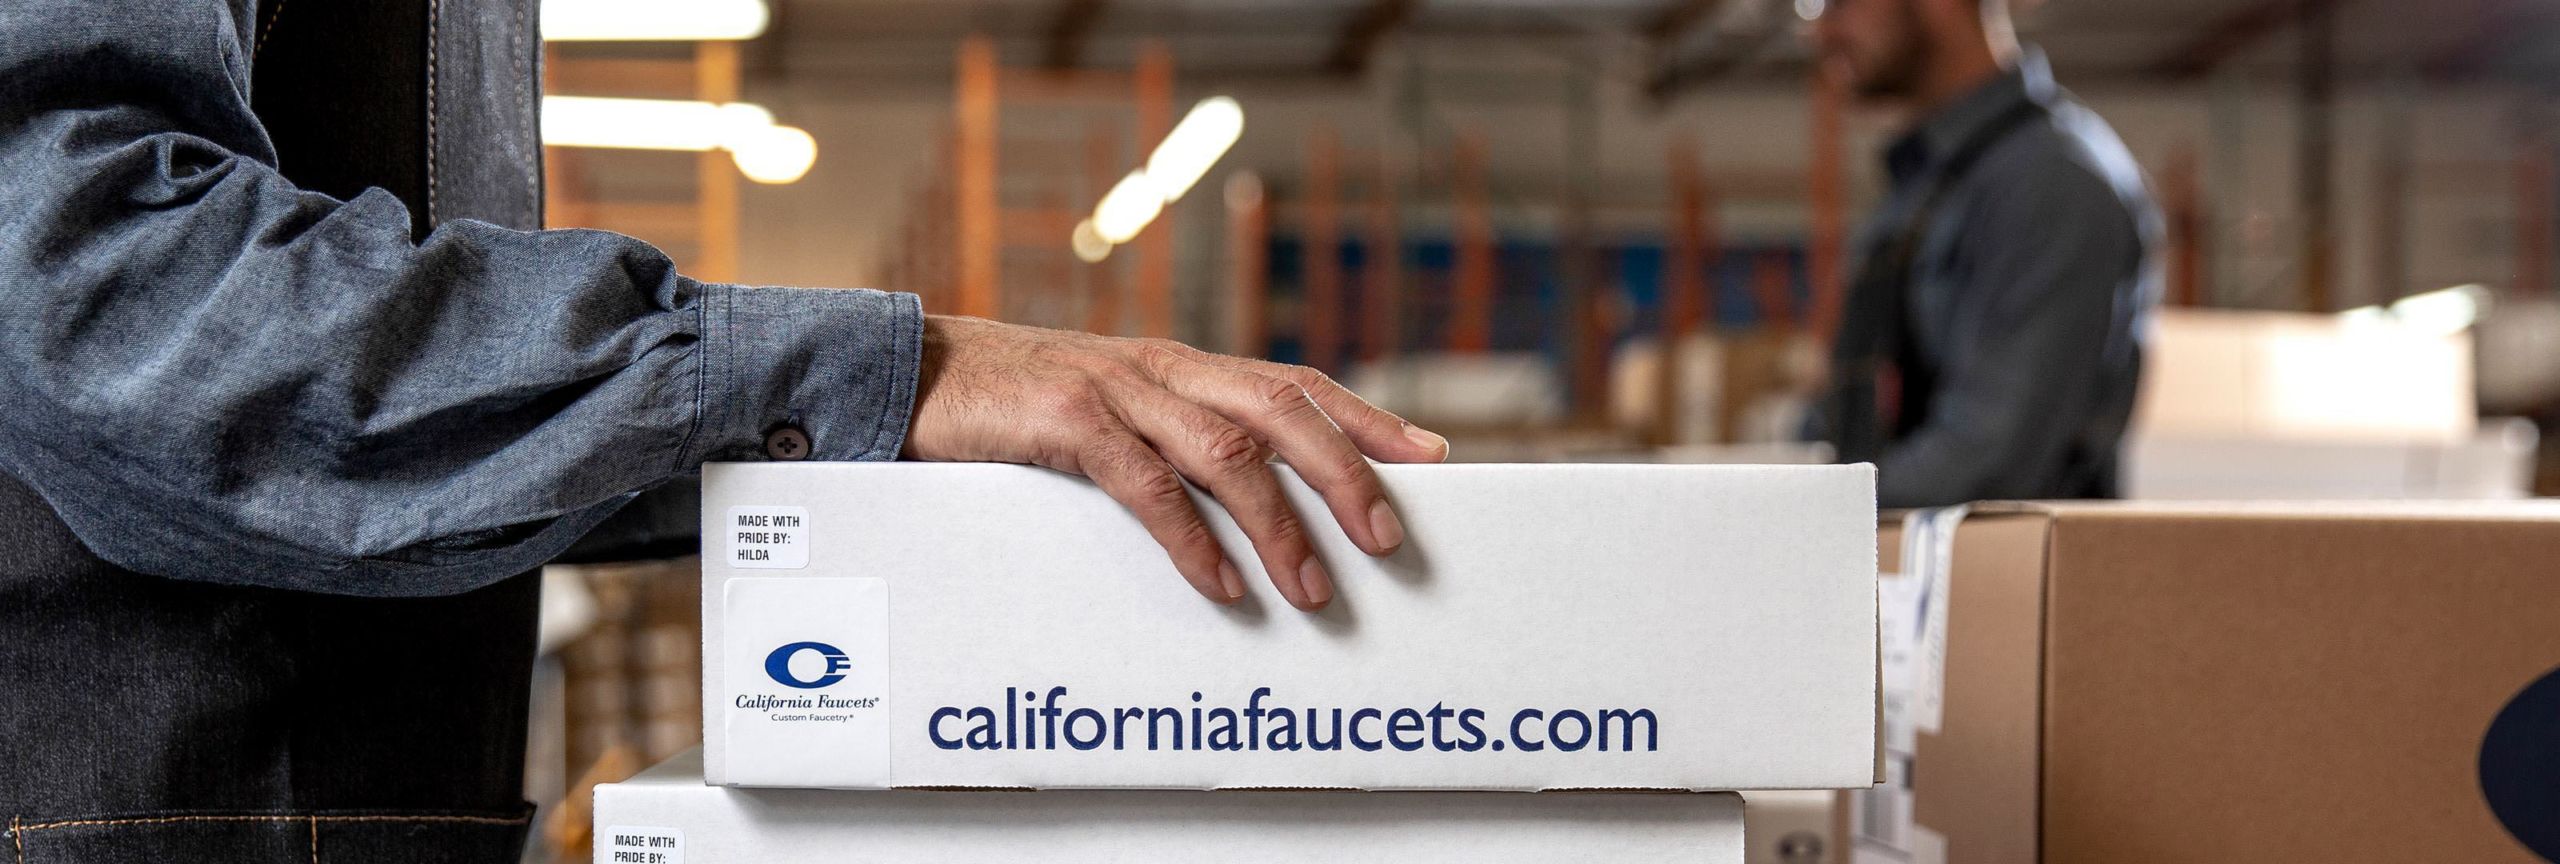 California Faucets Box ready to ship